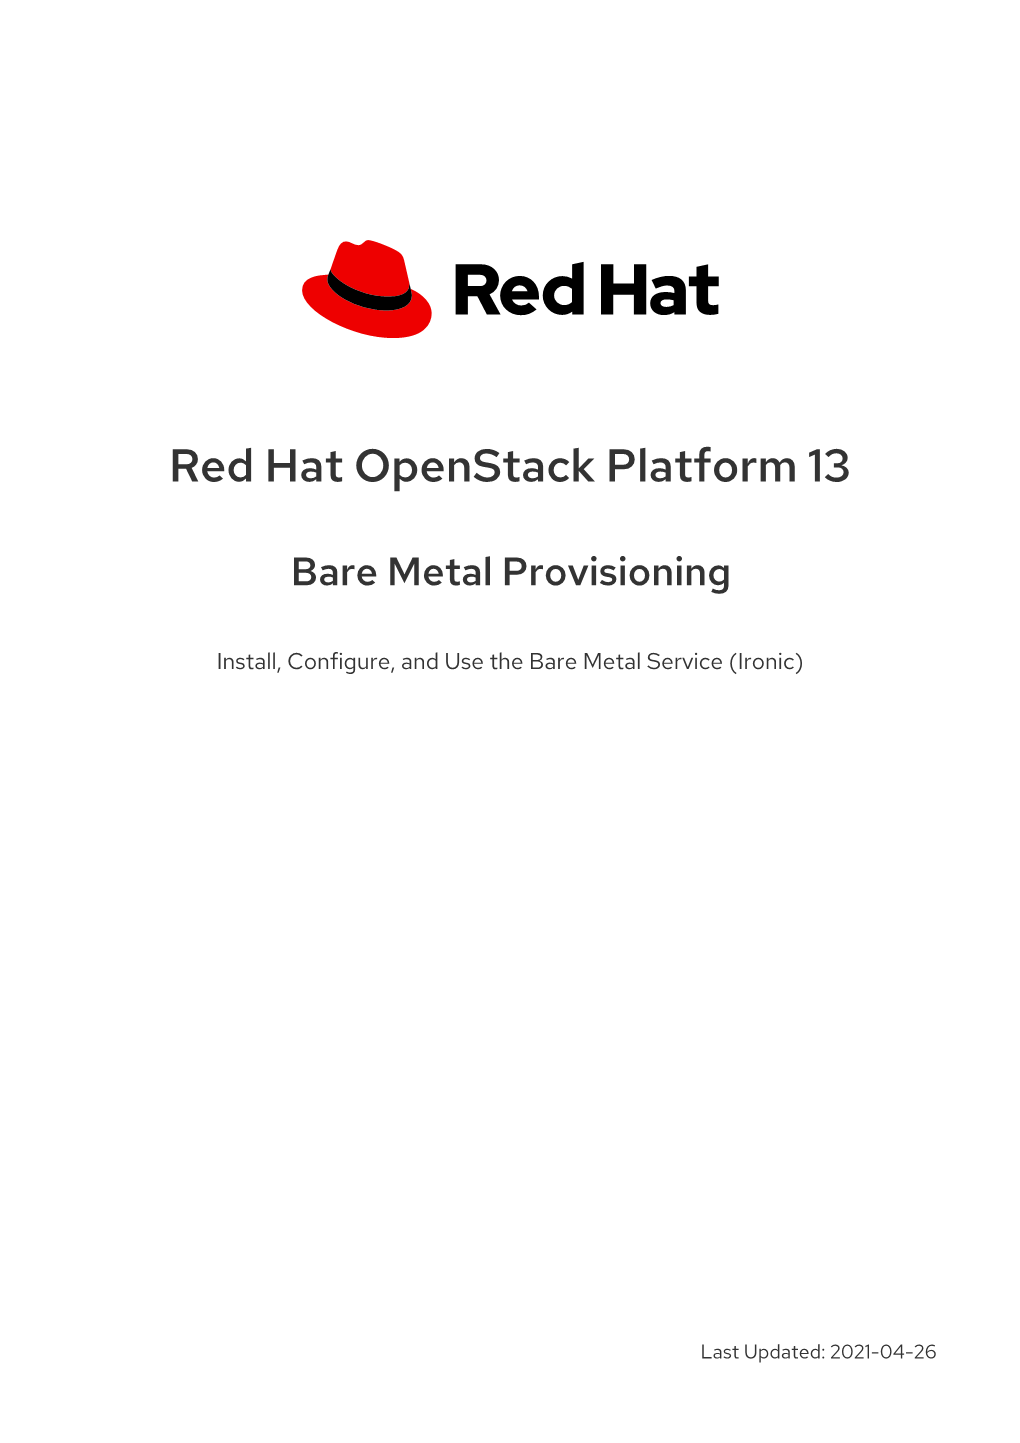 Red Hat Openstack Platform 13 Bare Metal Provisioning